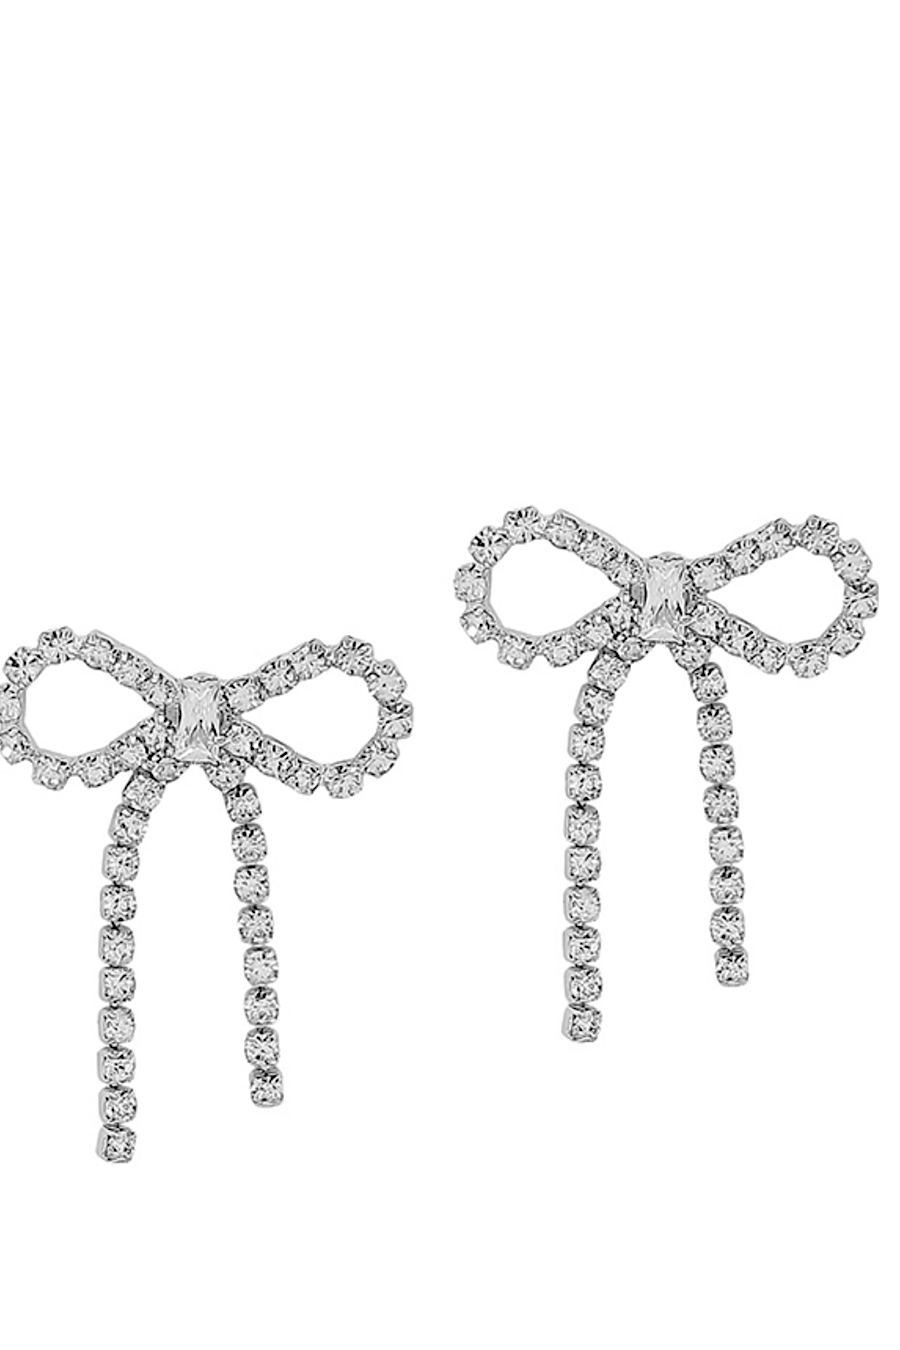 Rhinestone Bow Earrings in Silver or Gold